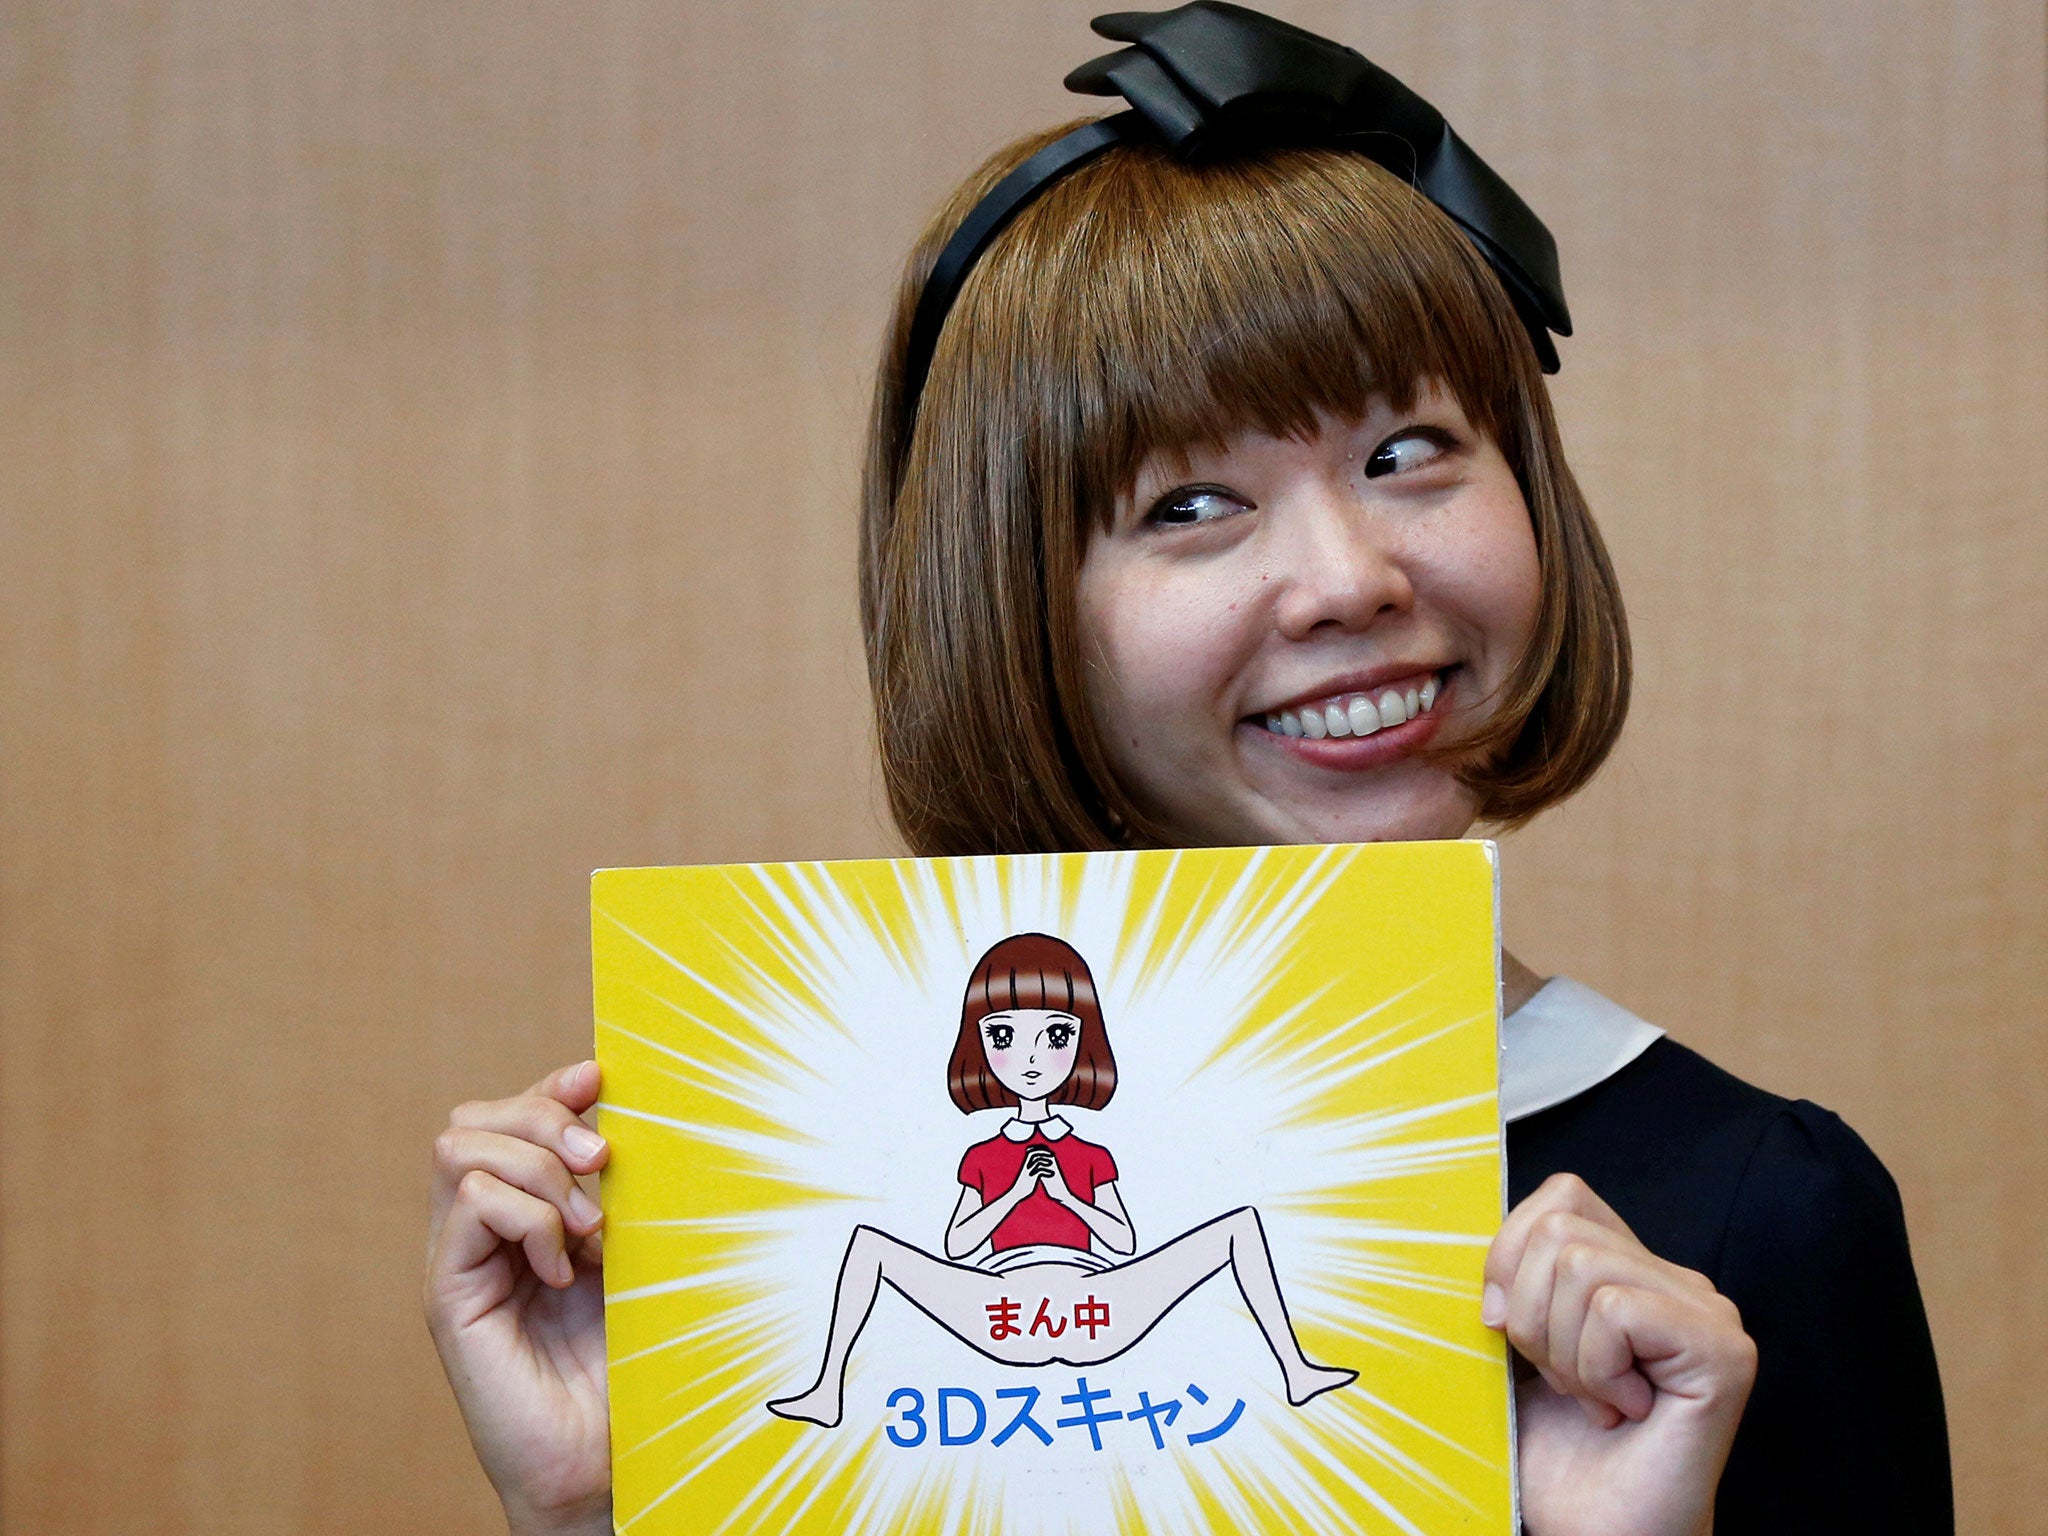 Japan Baby Naked - Megumi Igarashi found guilty of obscenity over 'vagina kayak ...